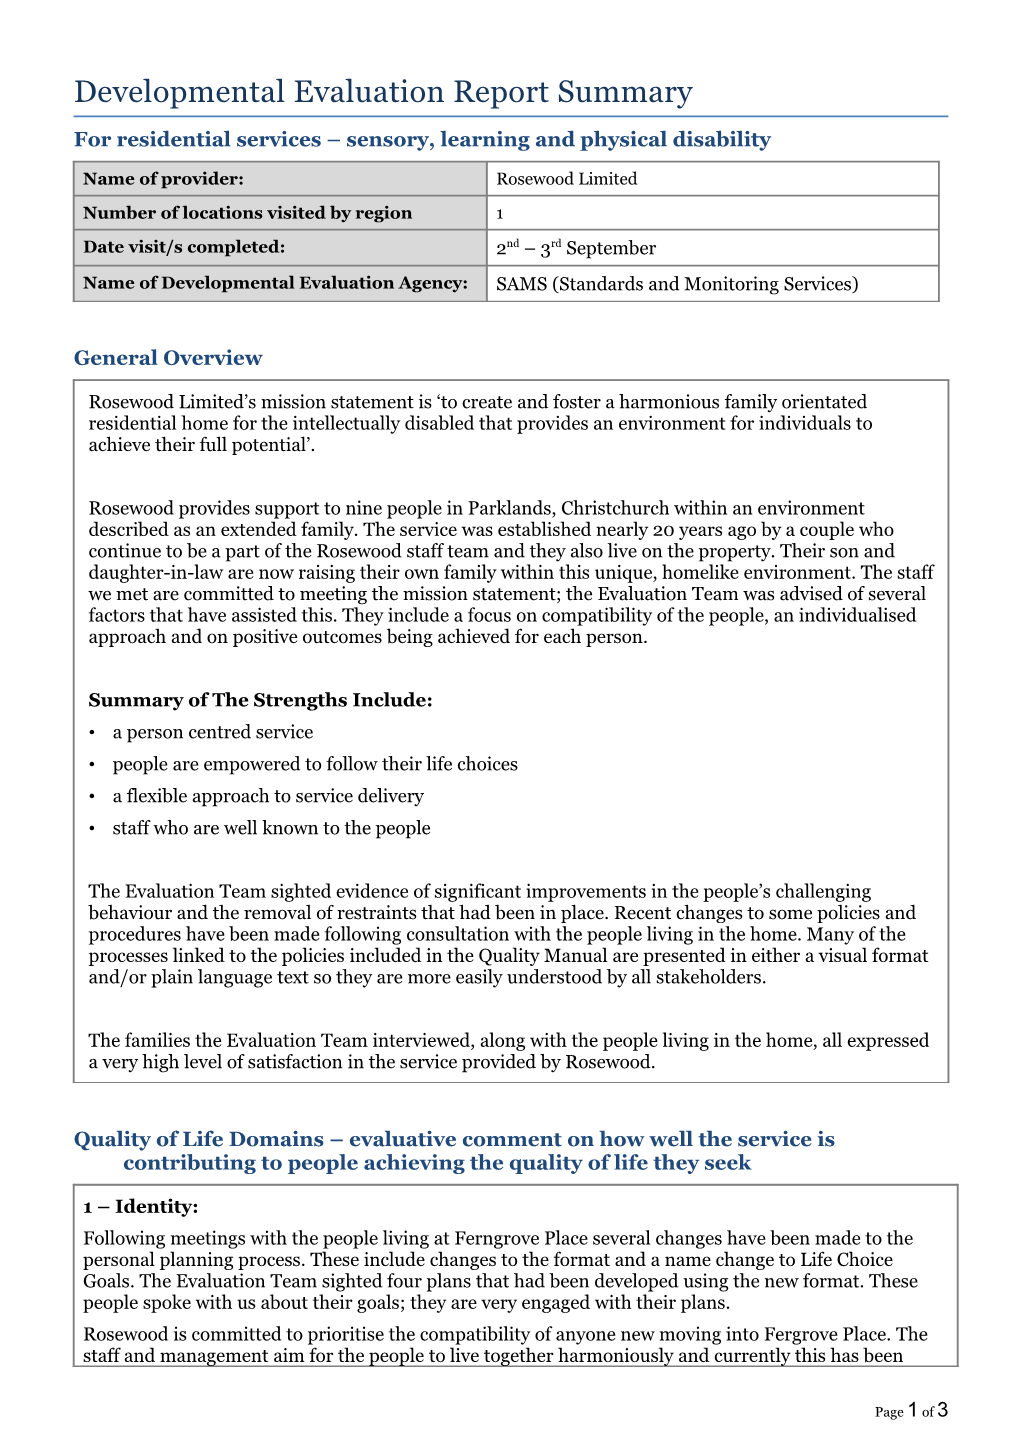 Developmental Evaluation Report Summary: Rosewood Limited